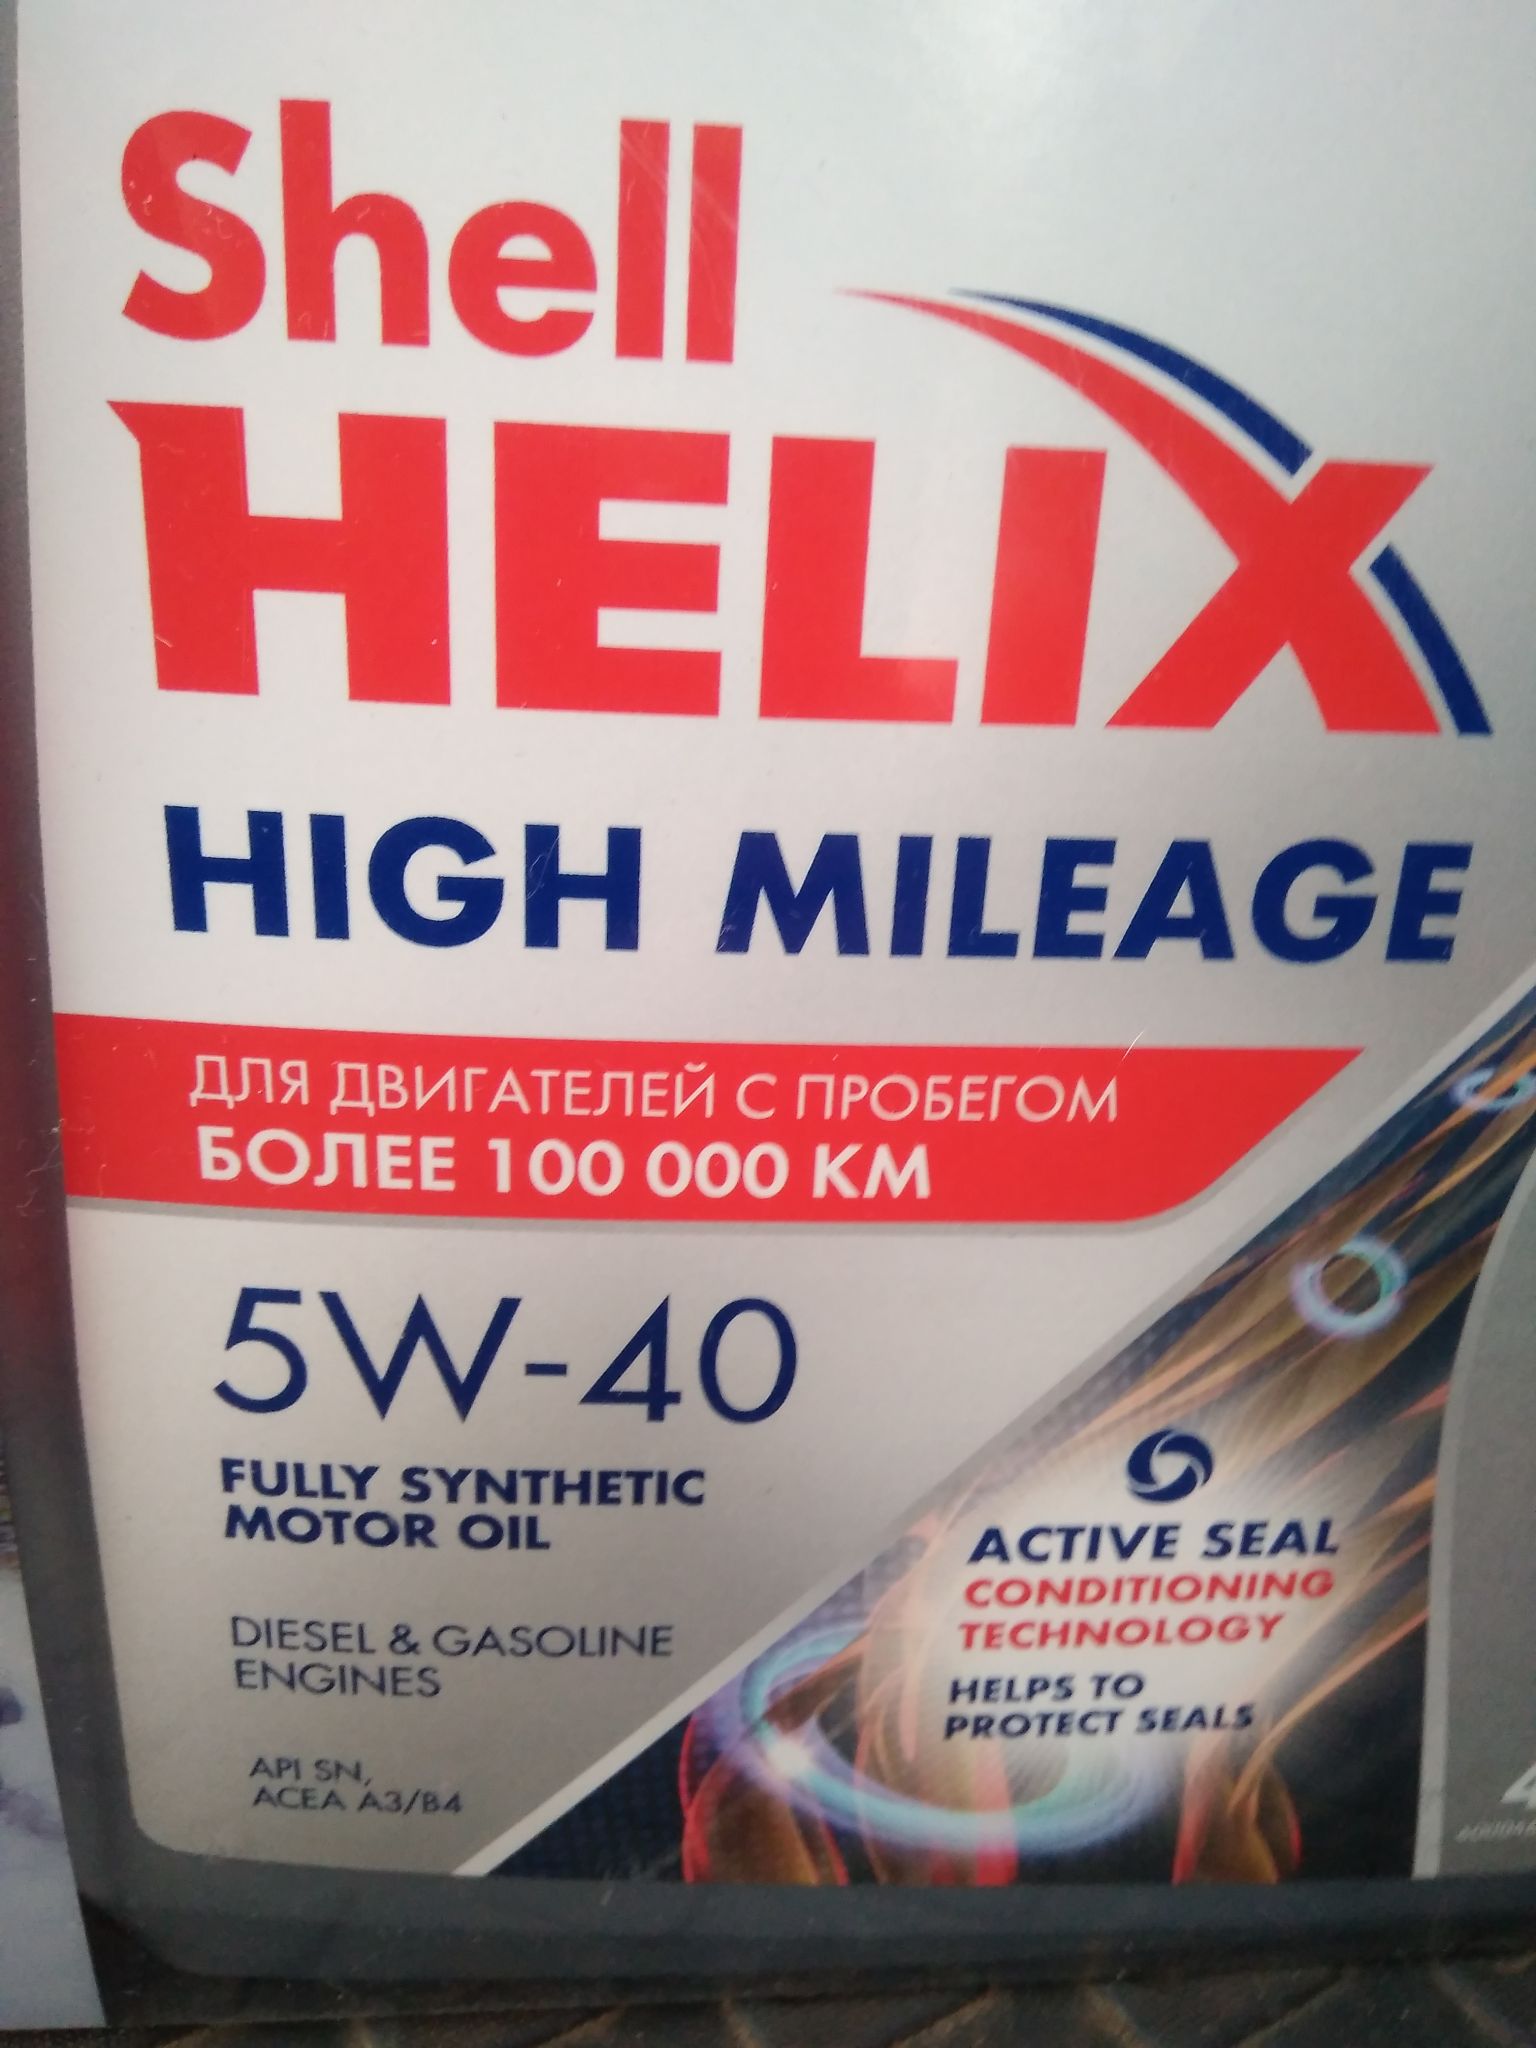 Helix high mileage. Shell Helix Mileage 5w-40. Shell Helix High-Mileage 5w40 (4л.). 550050425 Shell Helix High Mileage 5w-40 4l. Helix High Mileage 5w-40.